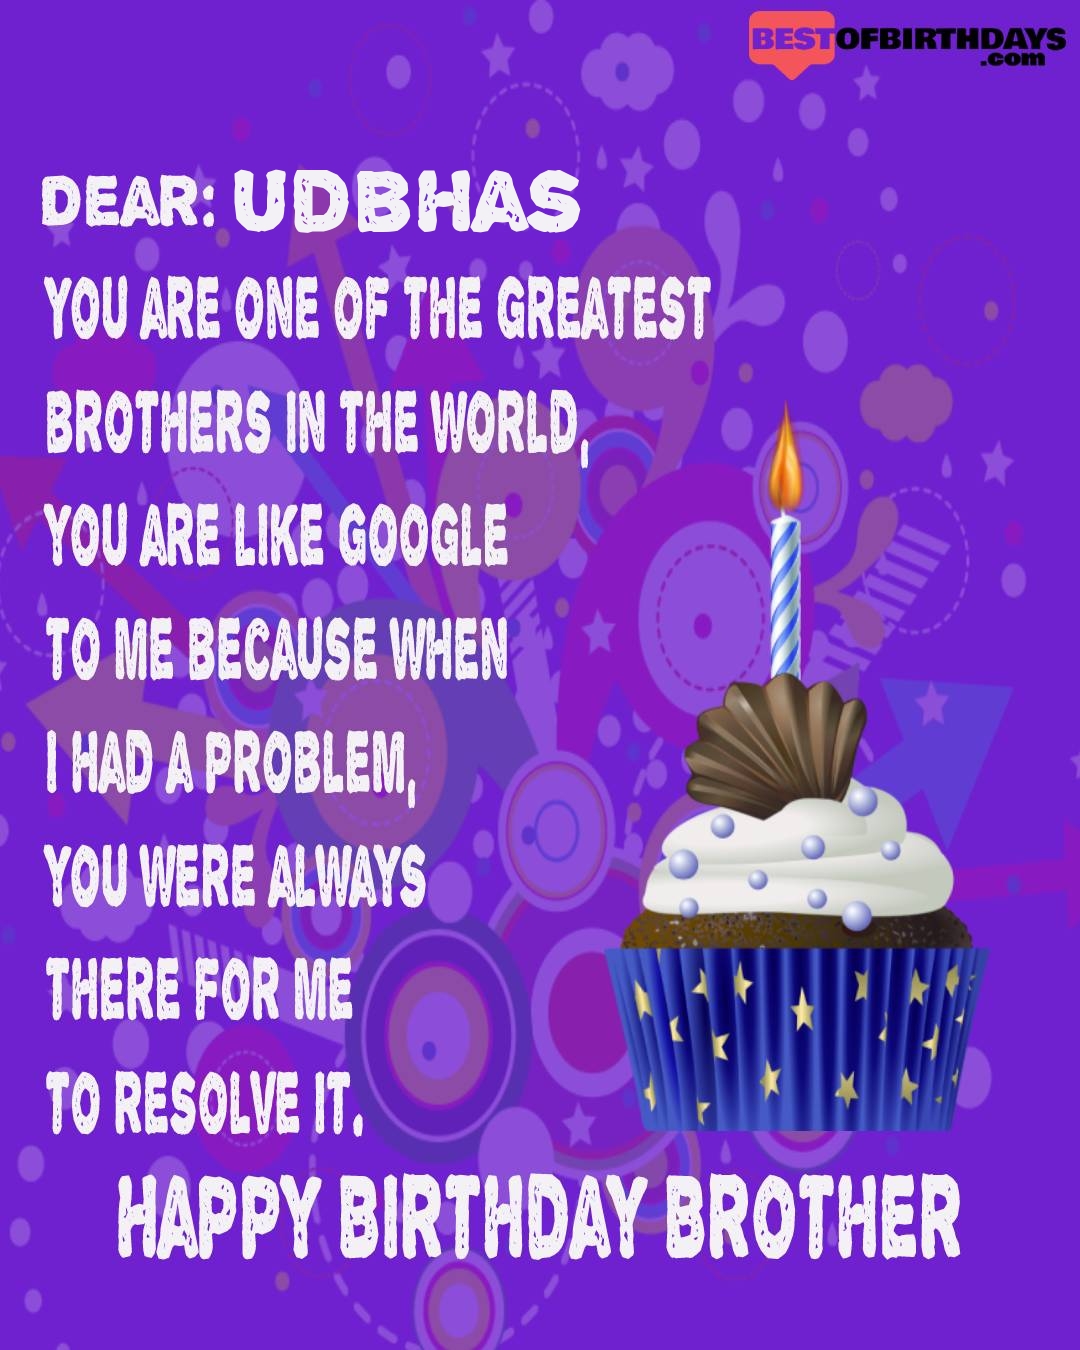 Happy birthday udbhas bhai brother bro